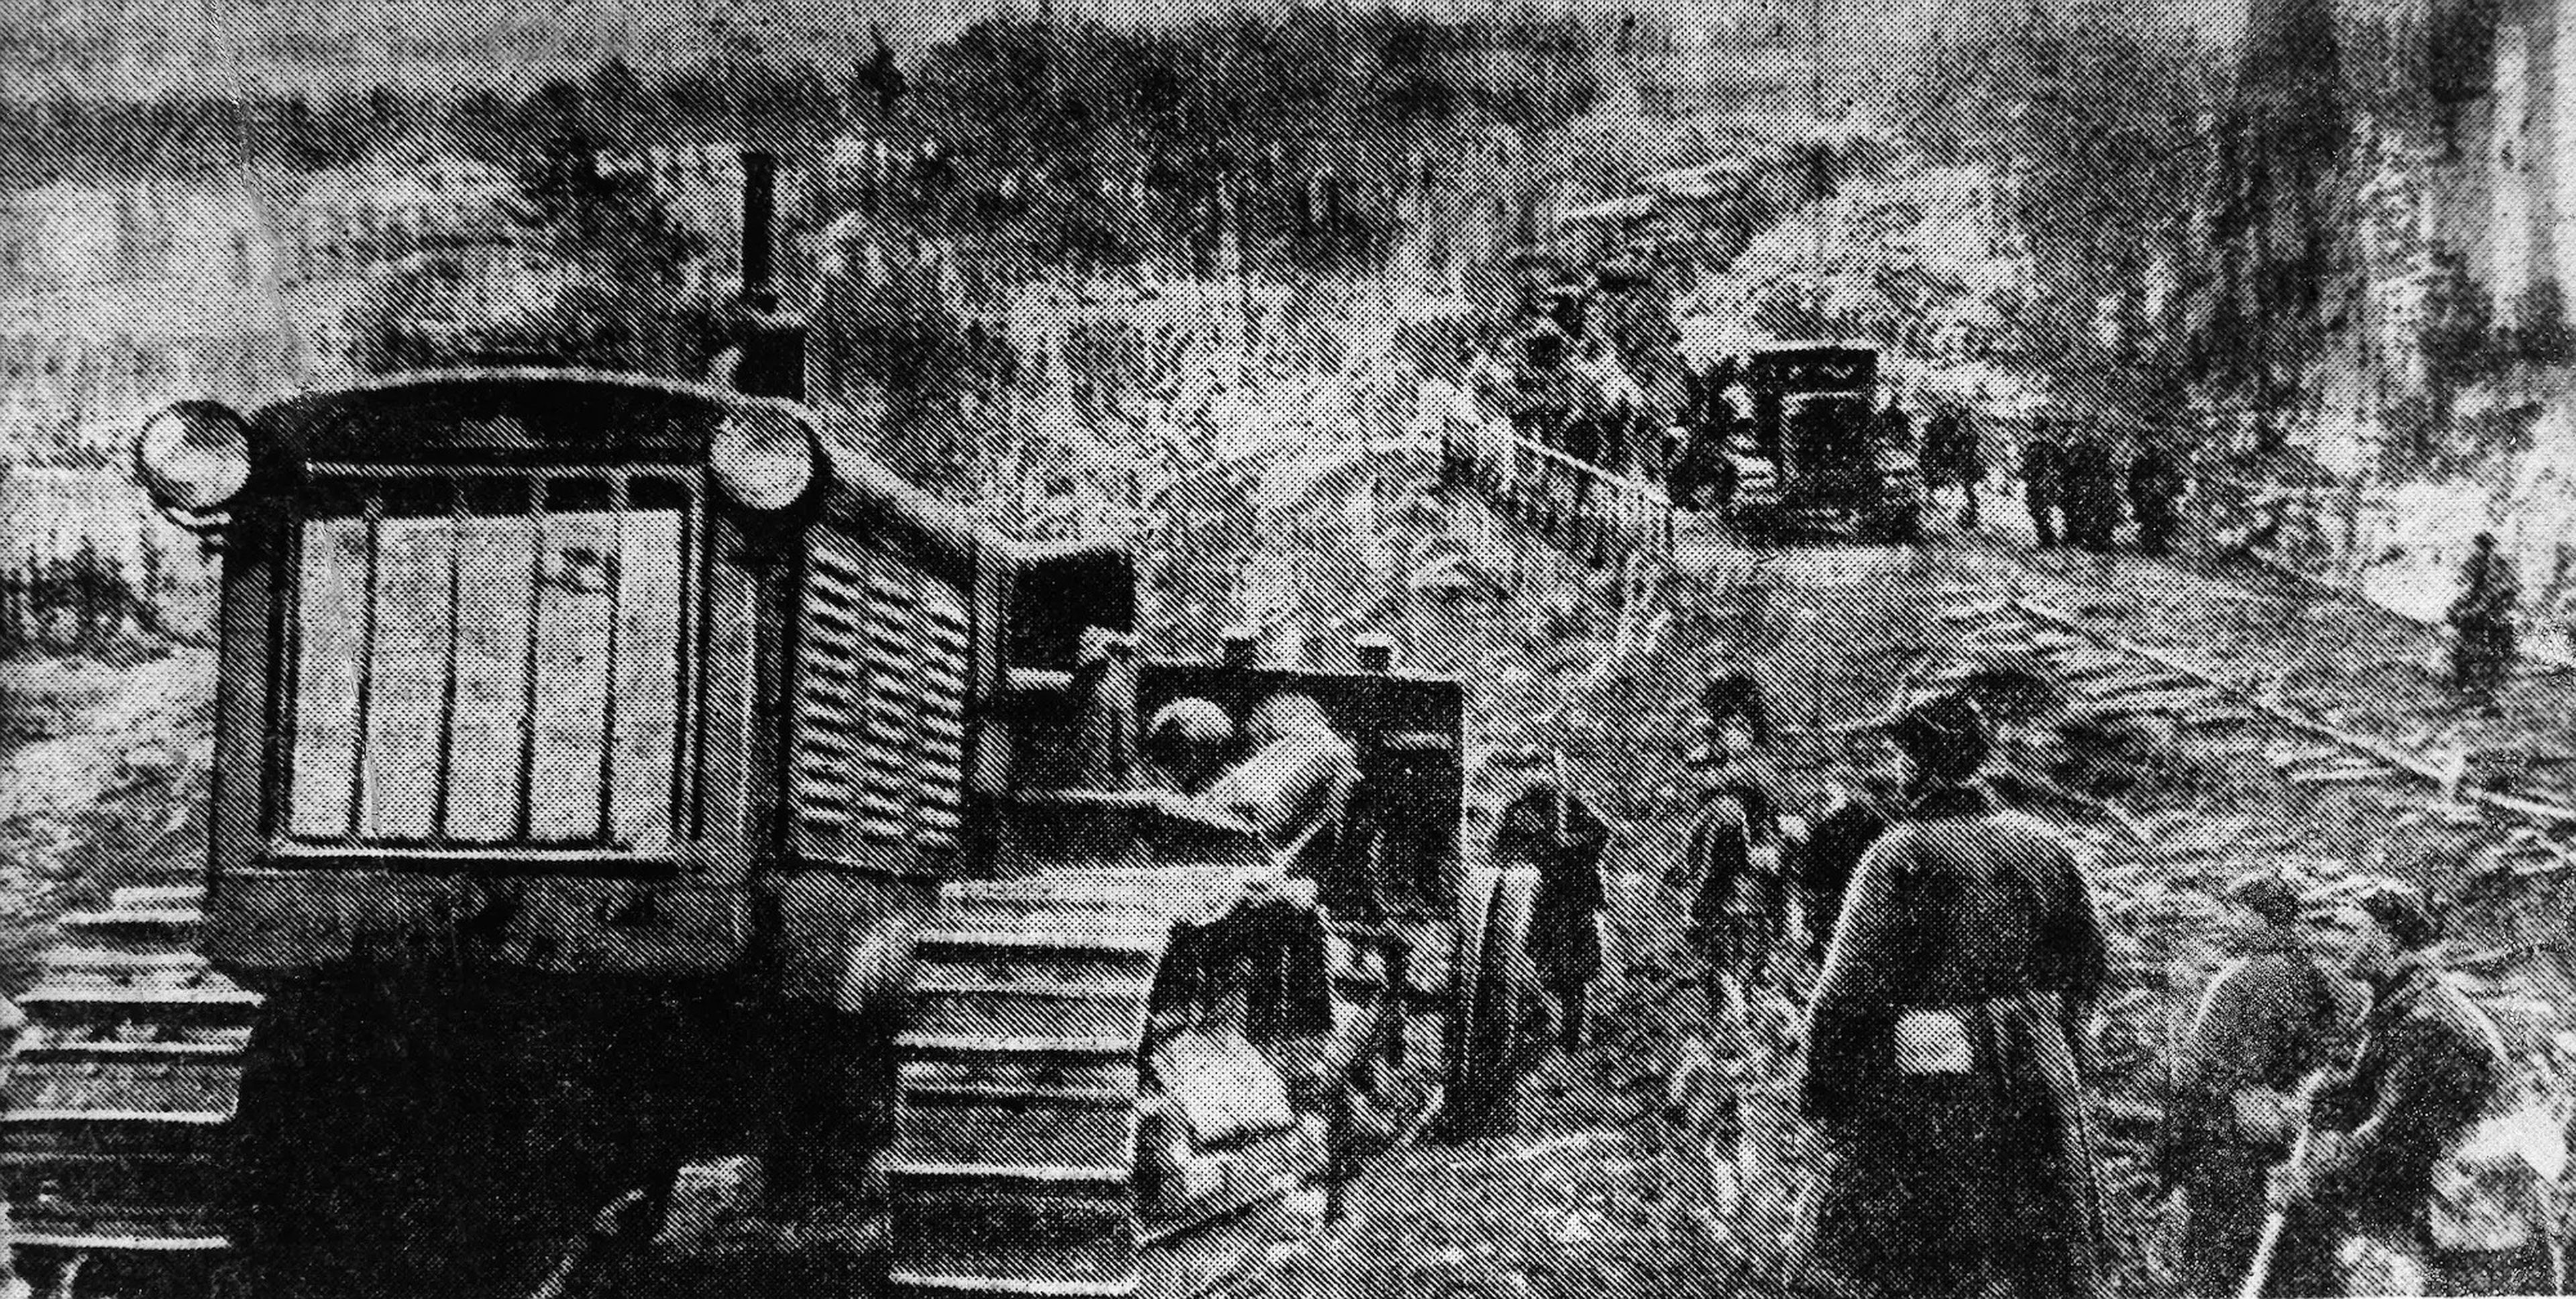 Un destacamento motorizado de artillería pesada soviética avanzando en territorio finlandés a finales de diciembre de 1939.